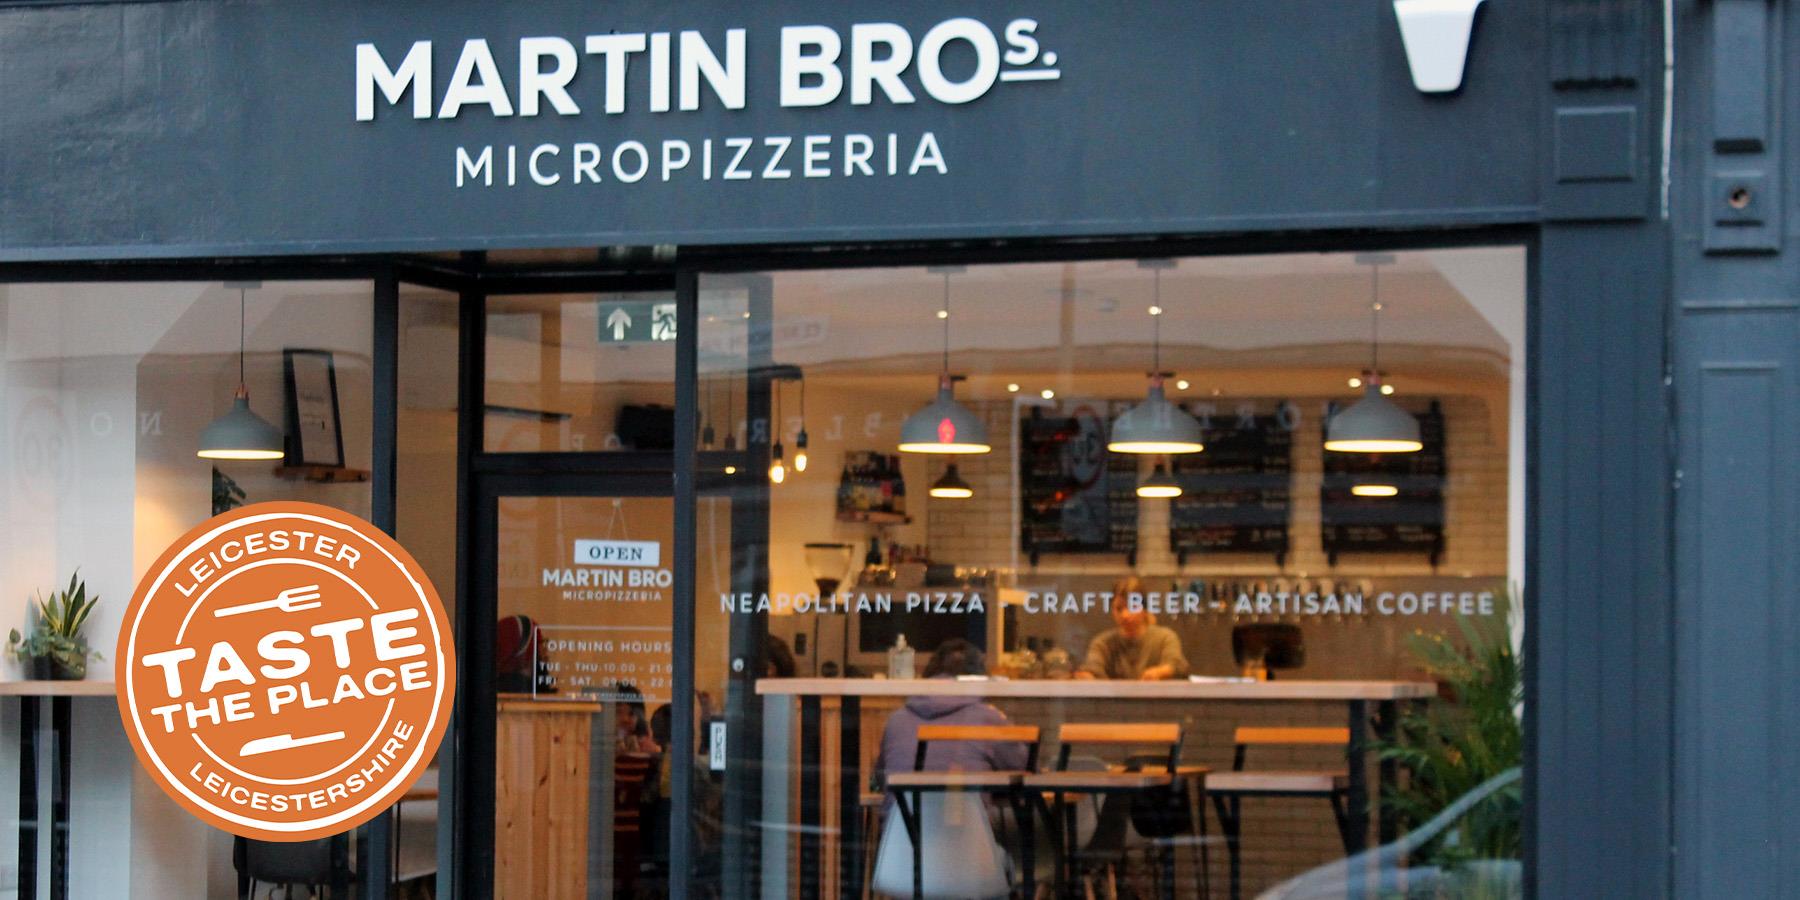 Martin Bros Micropizzeria